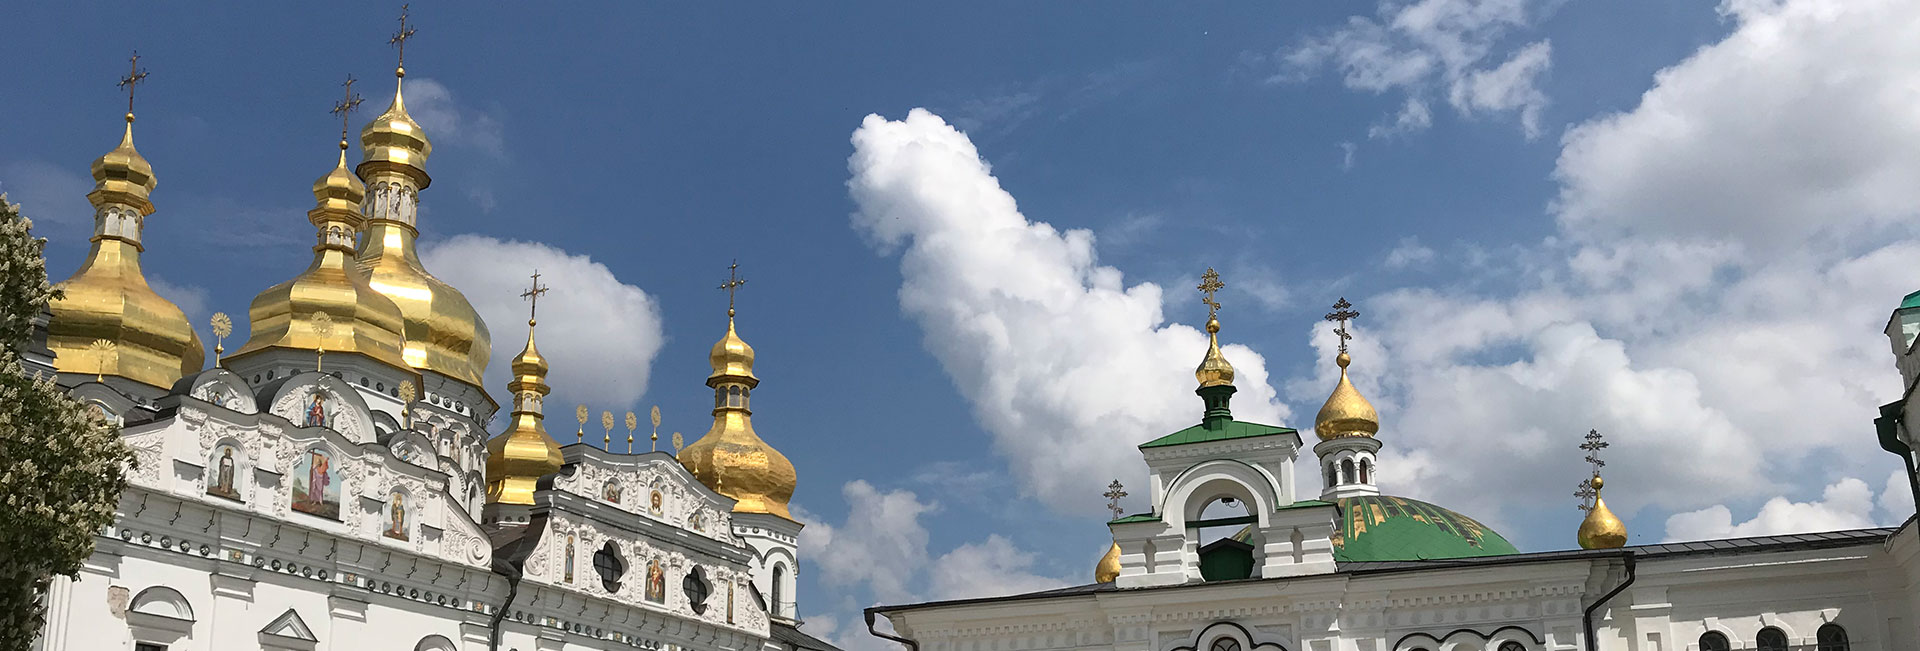 Pecherskaya Lavra - Monastery of the Caves, Kiev, Ukraine. Photo credit: Michel Behar